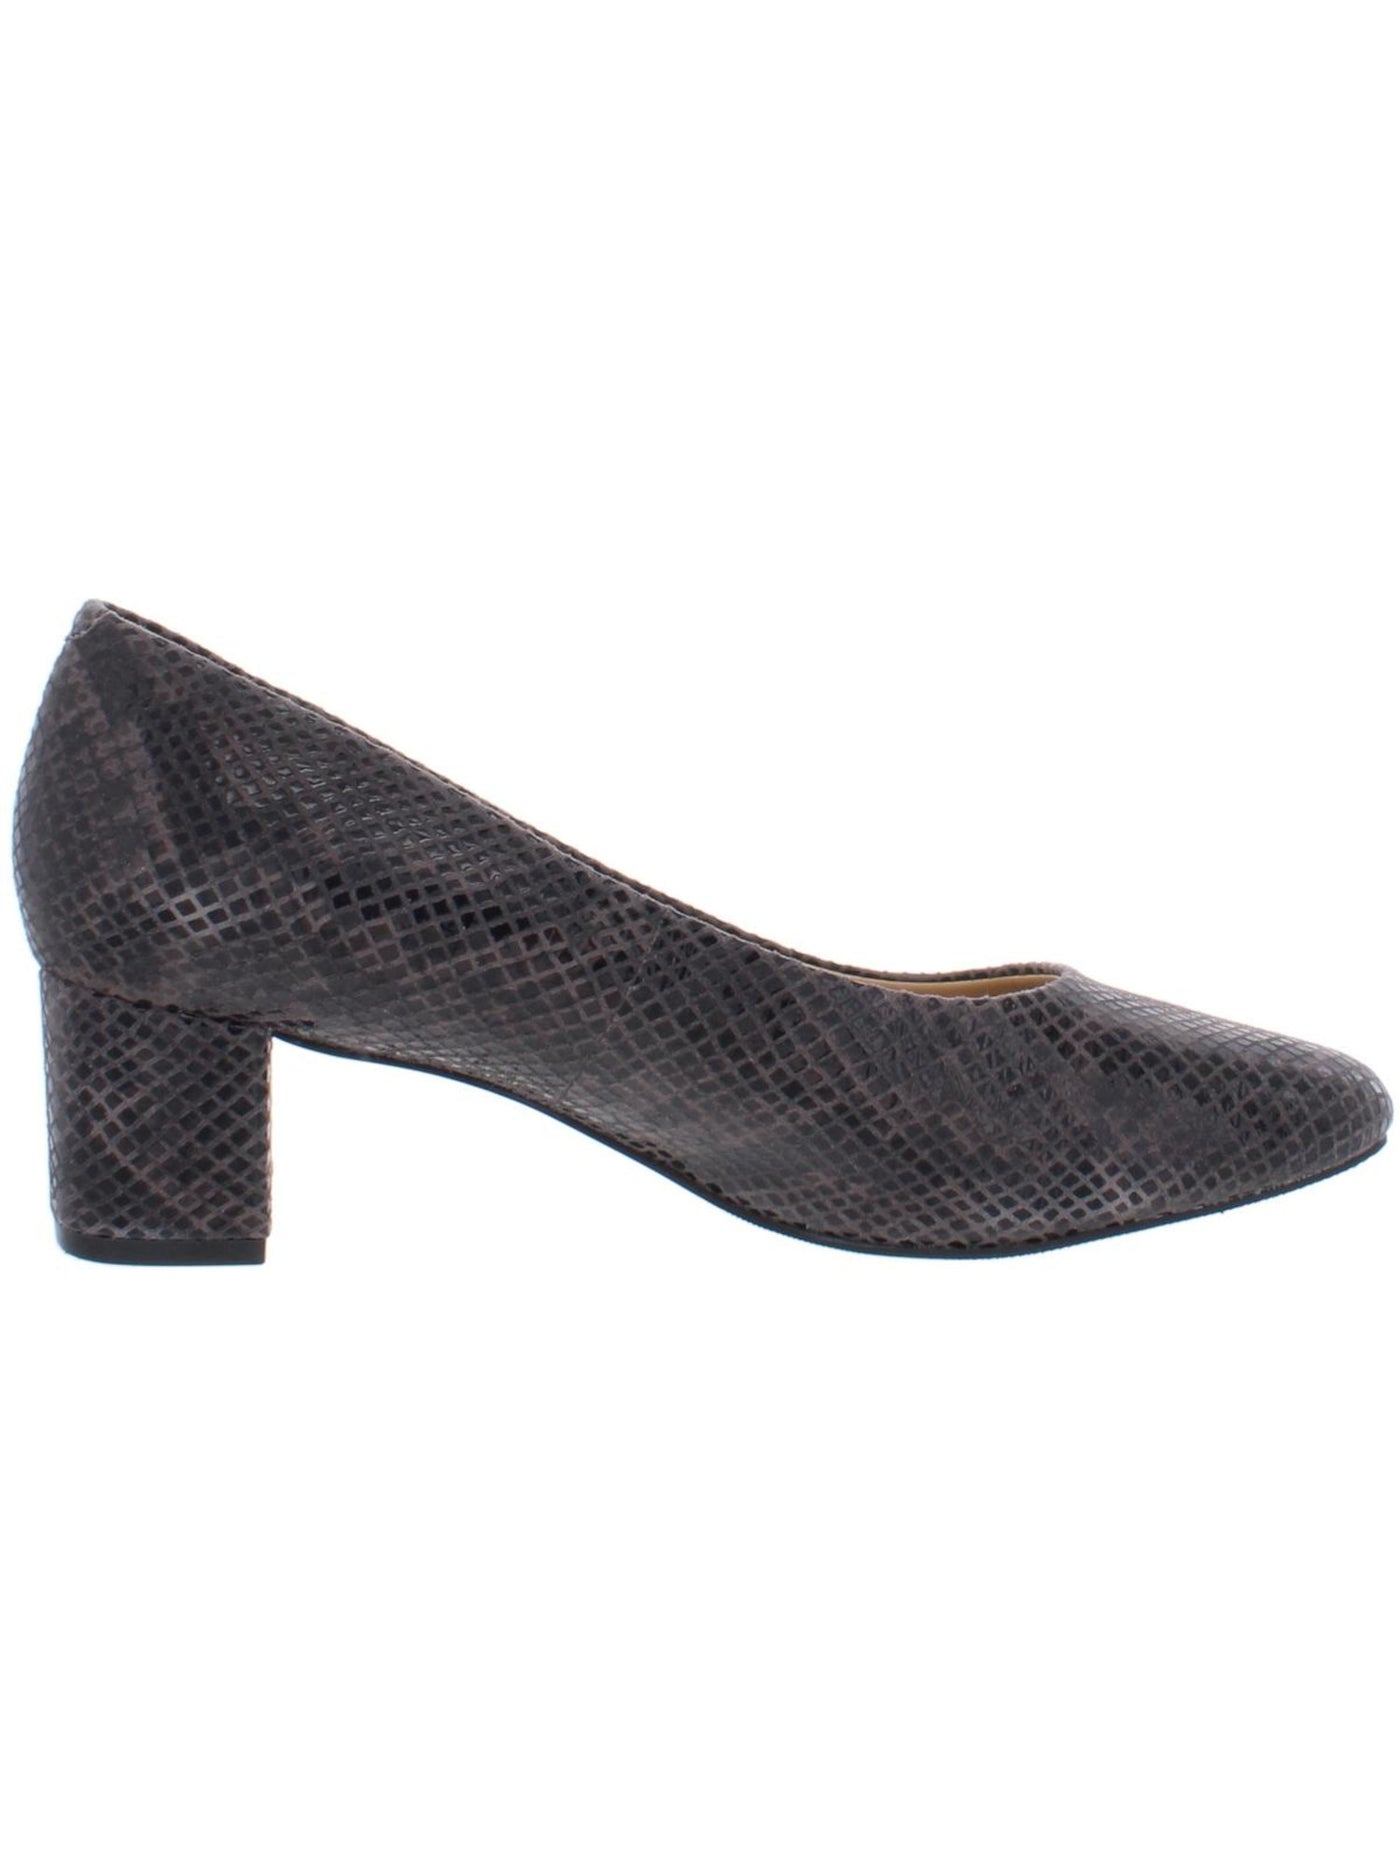 TROTTERS Womens Black Snake Print Cushioned Kari Pointed Toe Block Heel Slip On Leather Dress Pumps Shoes 6 M